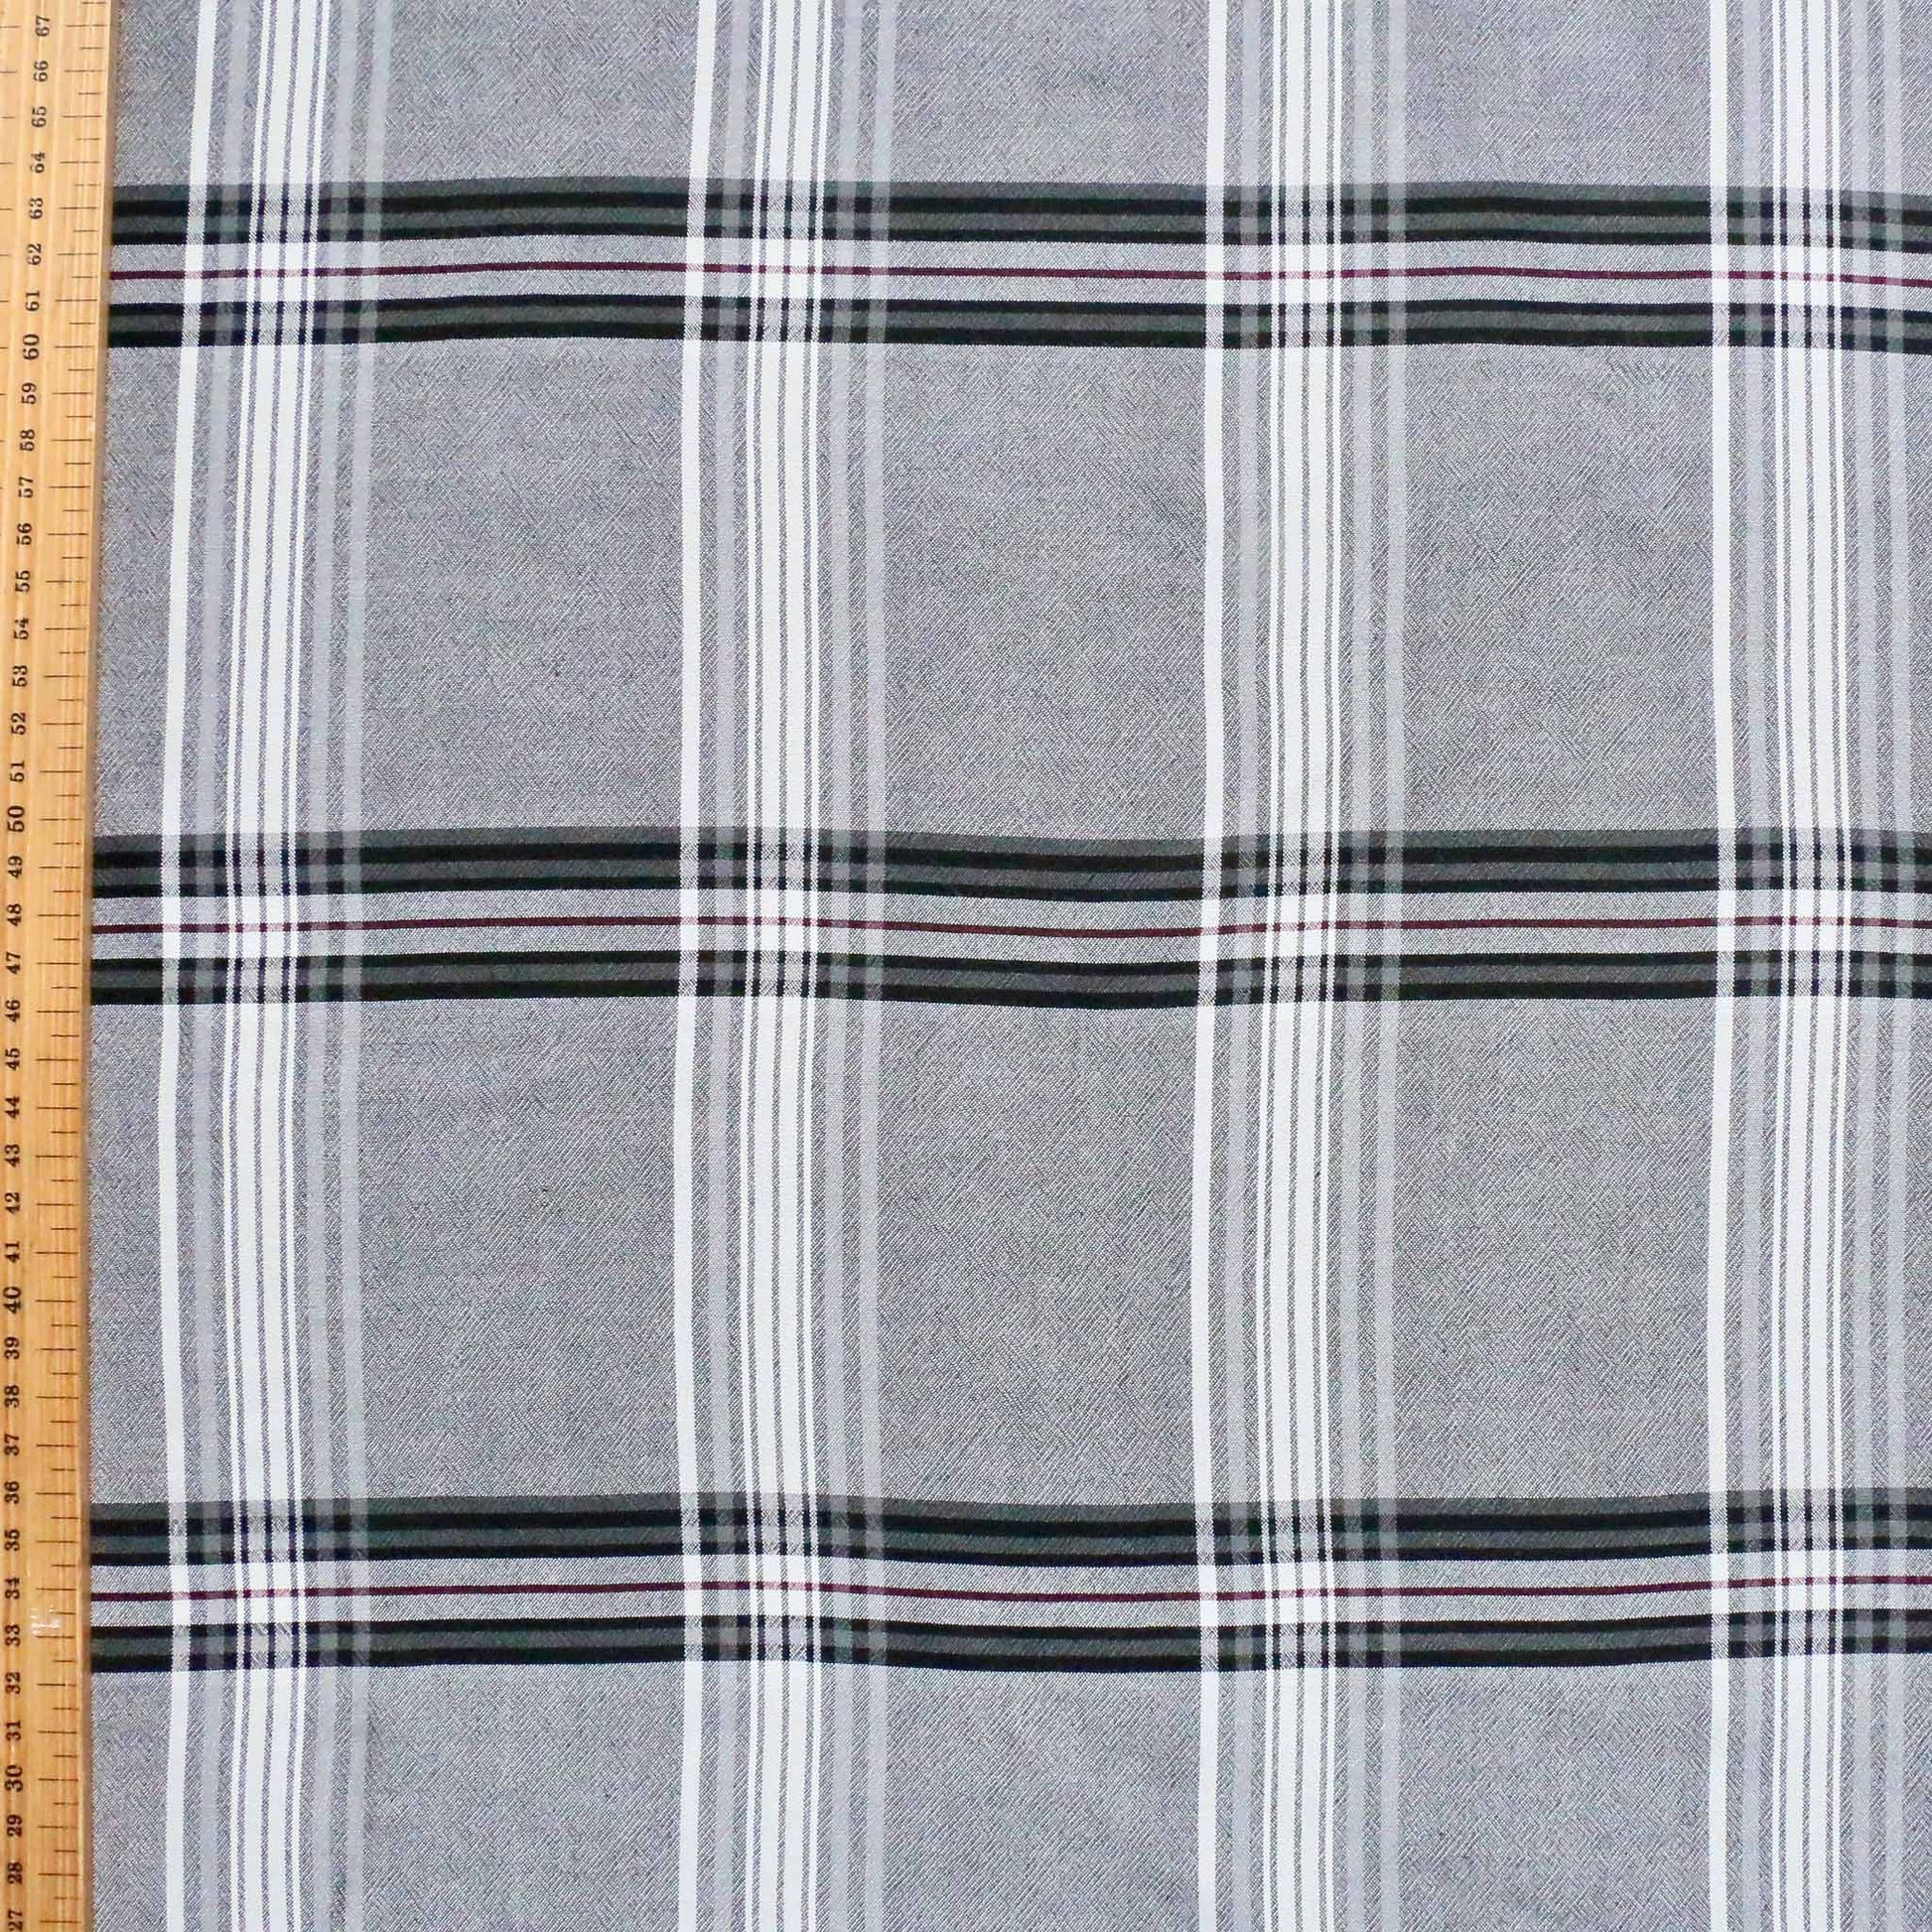 metre grey and black viscose challis dressmaking rayon fabric with white check pattern